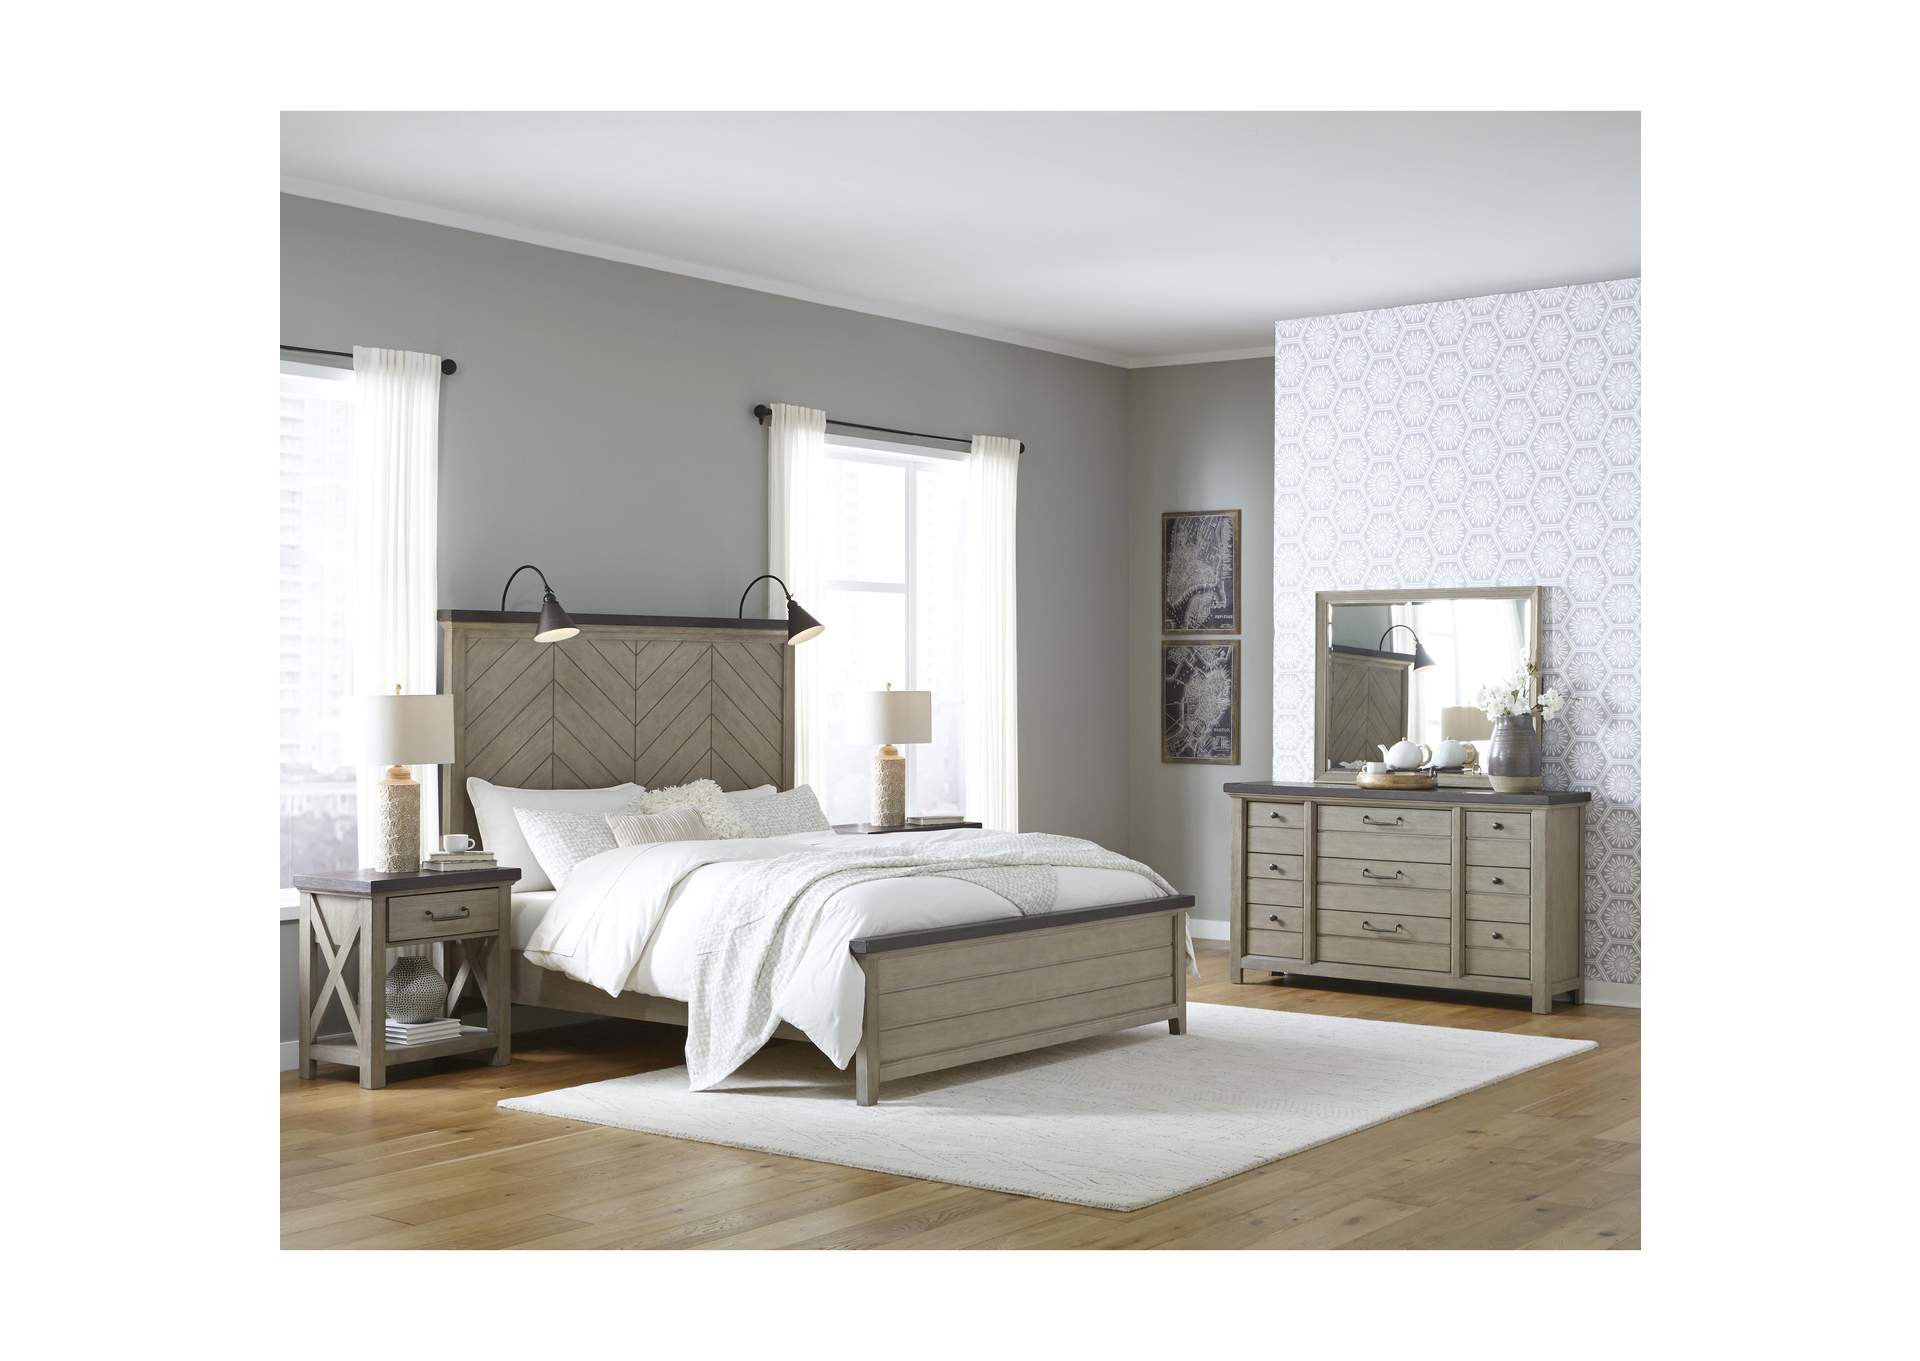 Emma 5 Piece Queen Bedroom Set,Pulaski Furniture